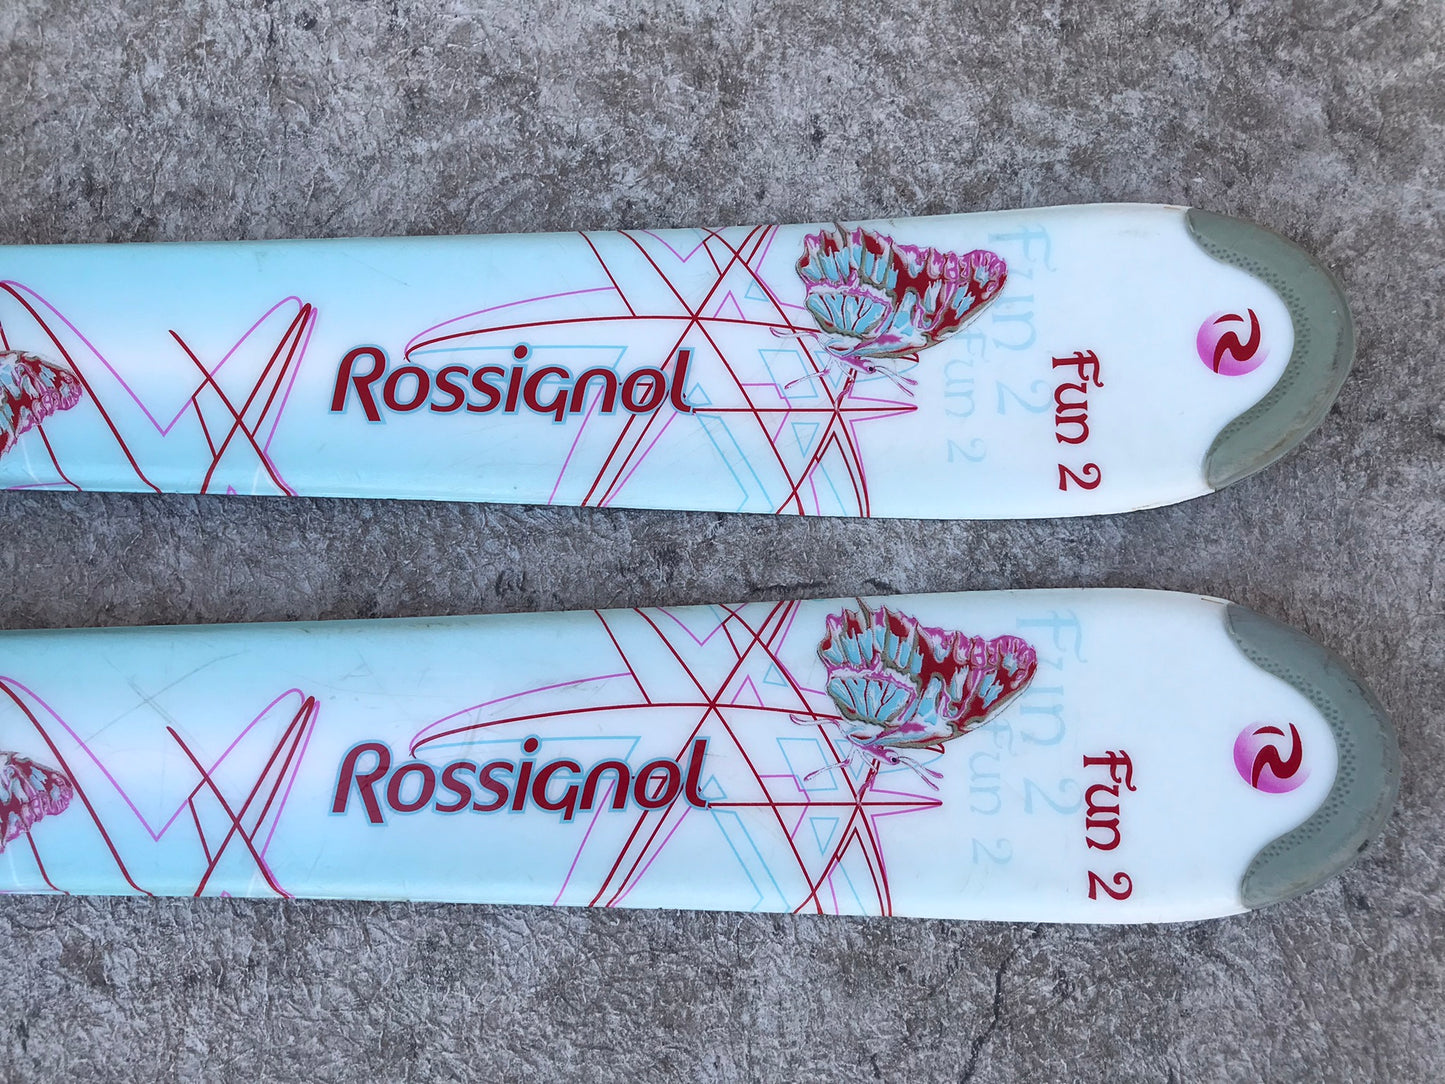 Ski 110 Rossignol Fun Girl 2 Blue Pink Red Parabolic With Bindings